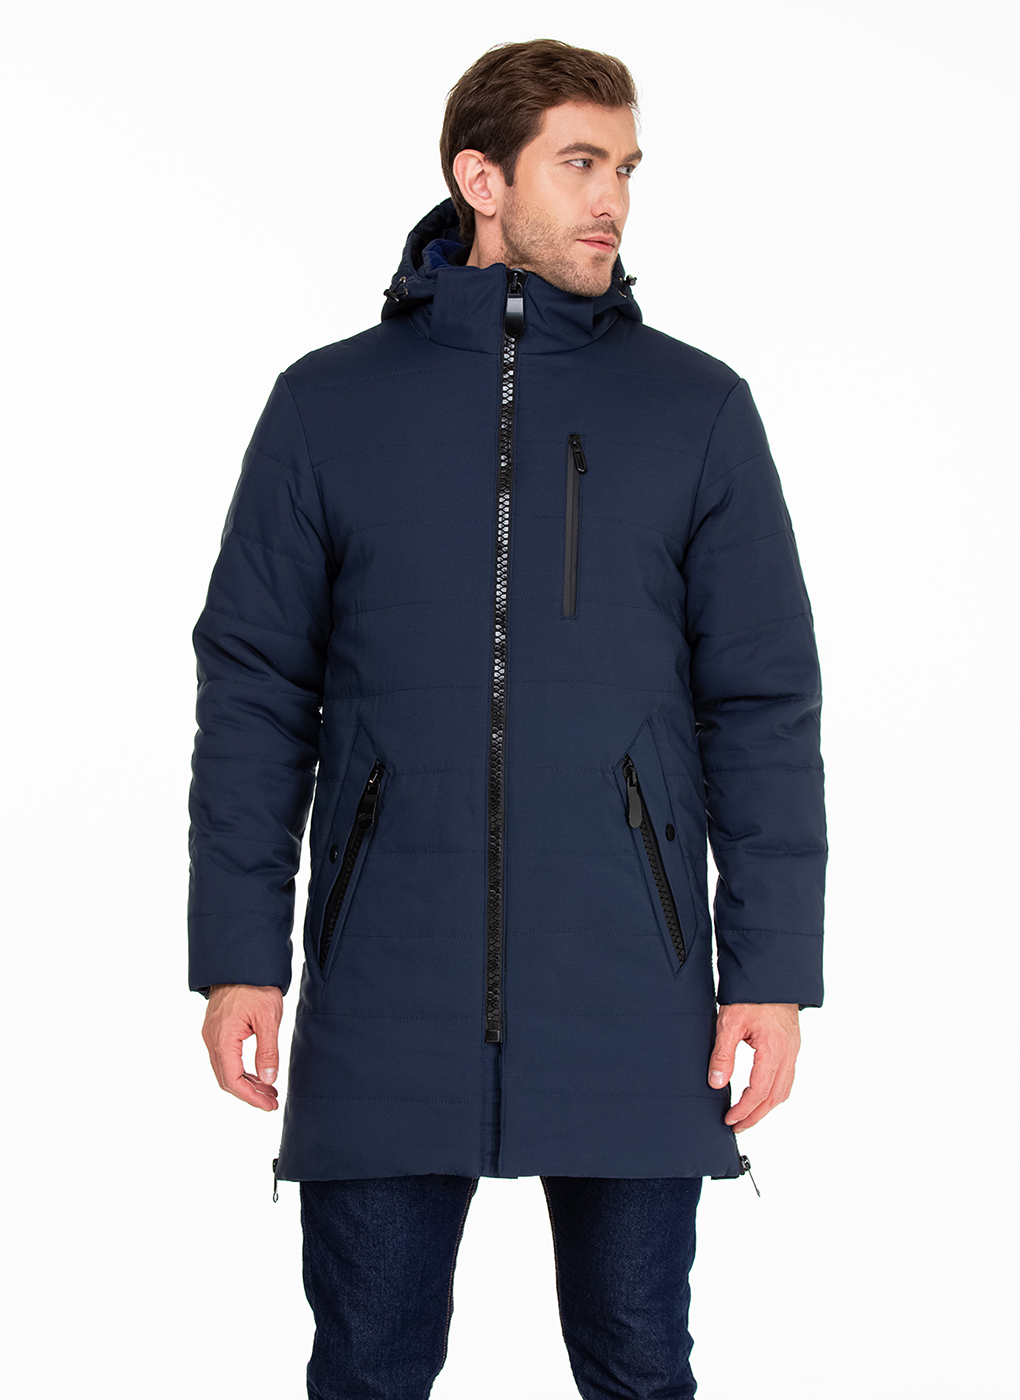 Зимняя куртка мужская Amimoda 65196 синяя 54 RU